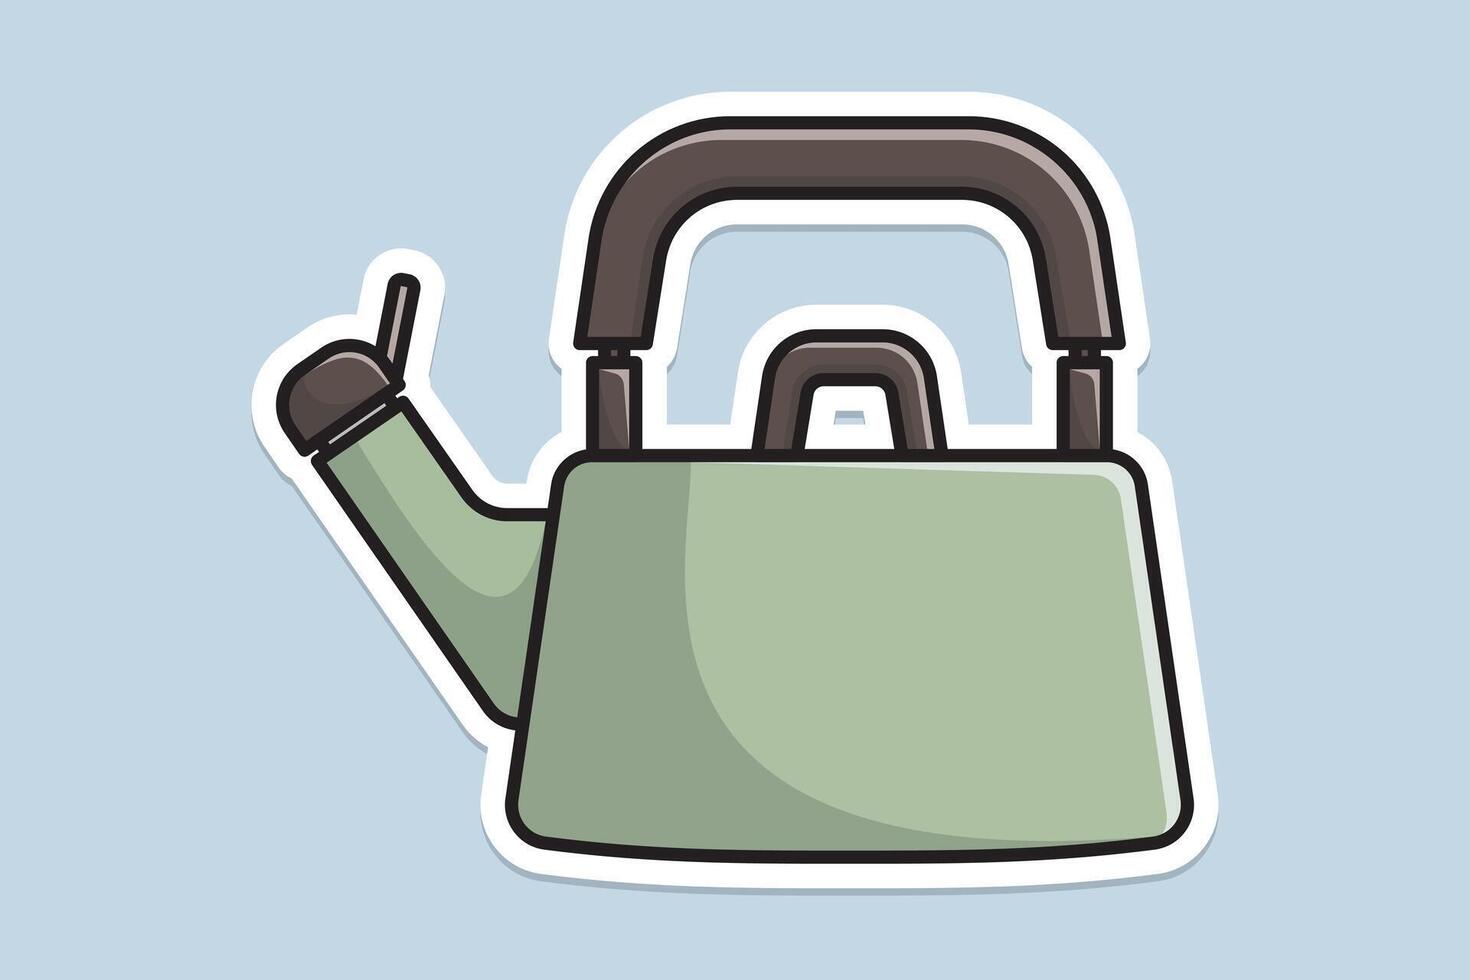 Simple Style Kettle sticker design vector illustration. Kitchen interior object icon concept. Kitchen Teapot with closed lid sticker design with shadow. Restaurant kettle icon logo.